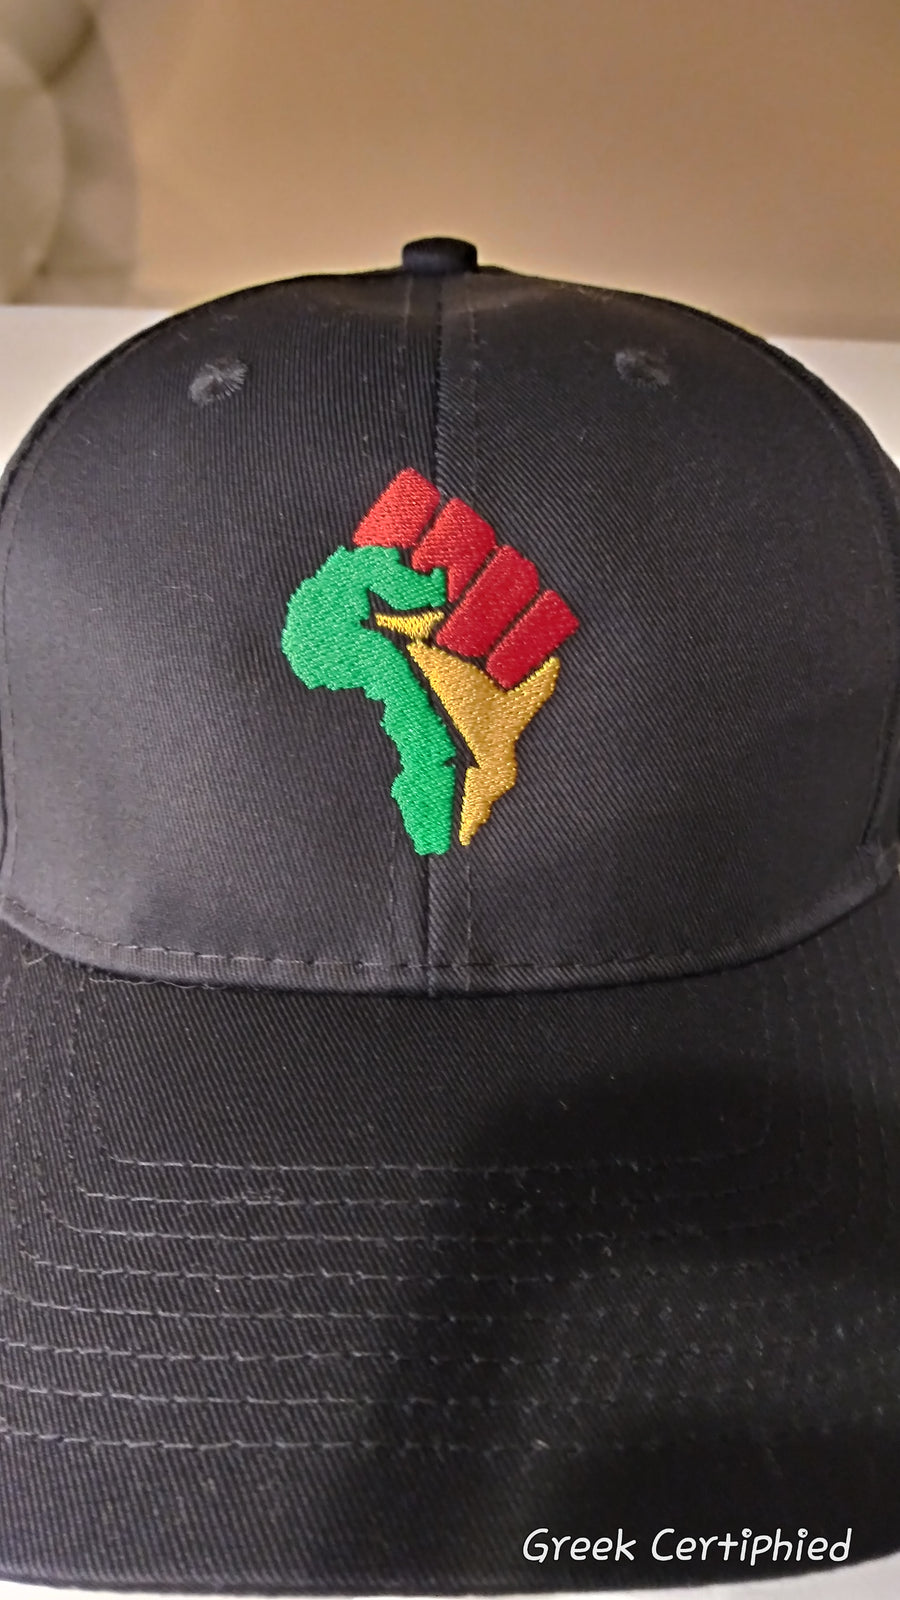 Africa/Black Power Hat